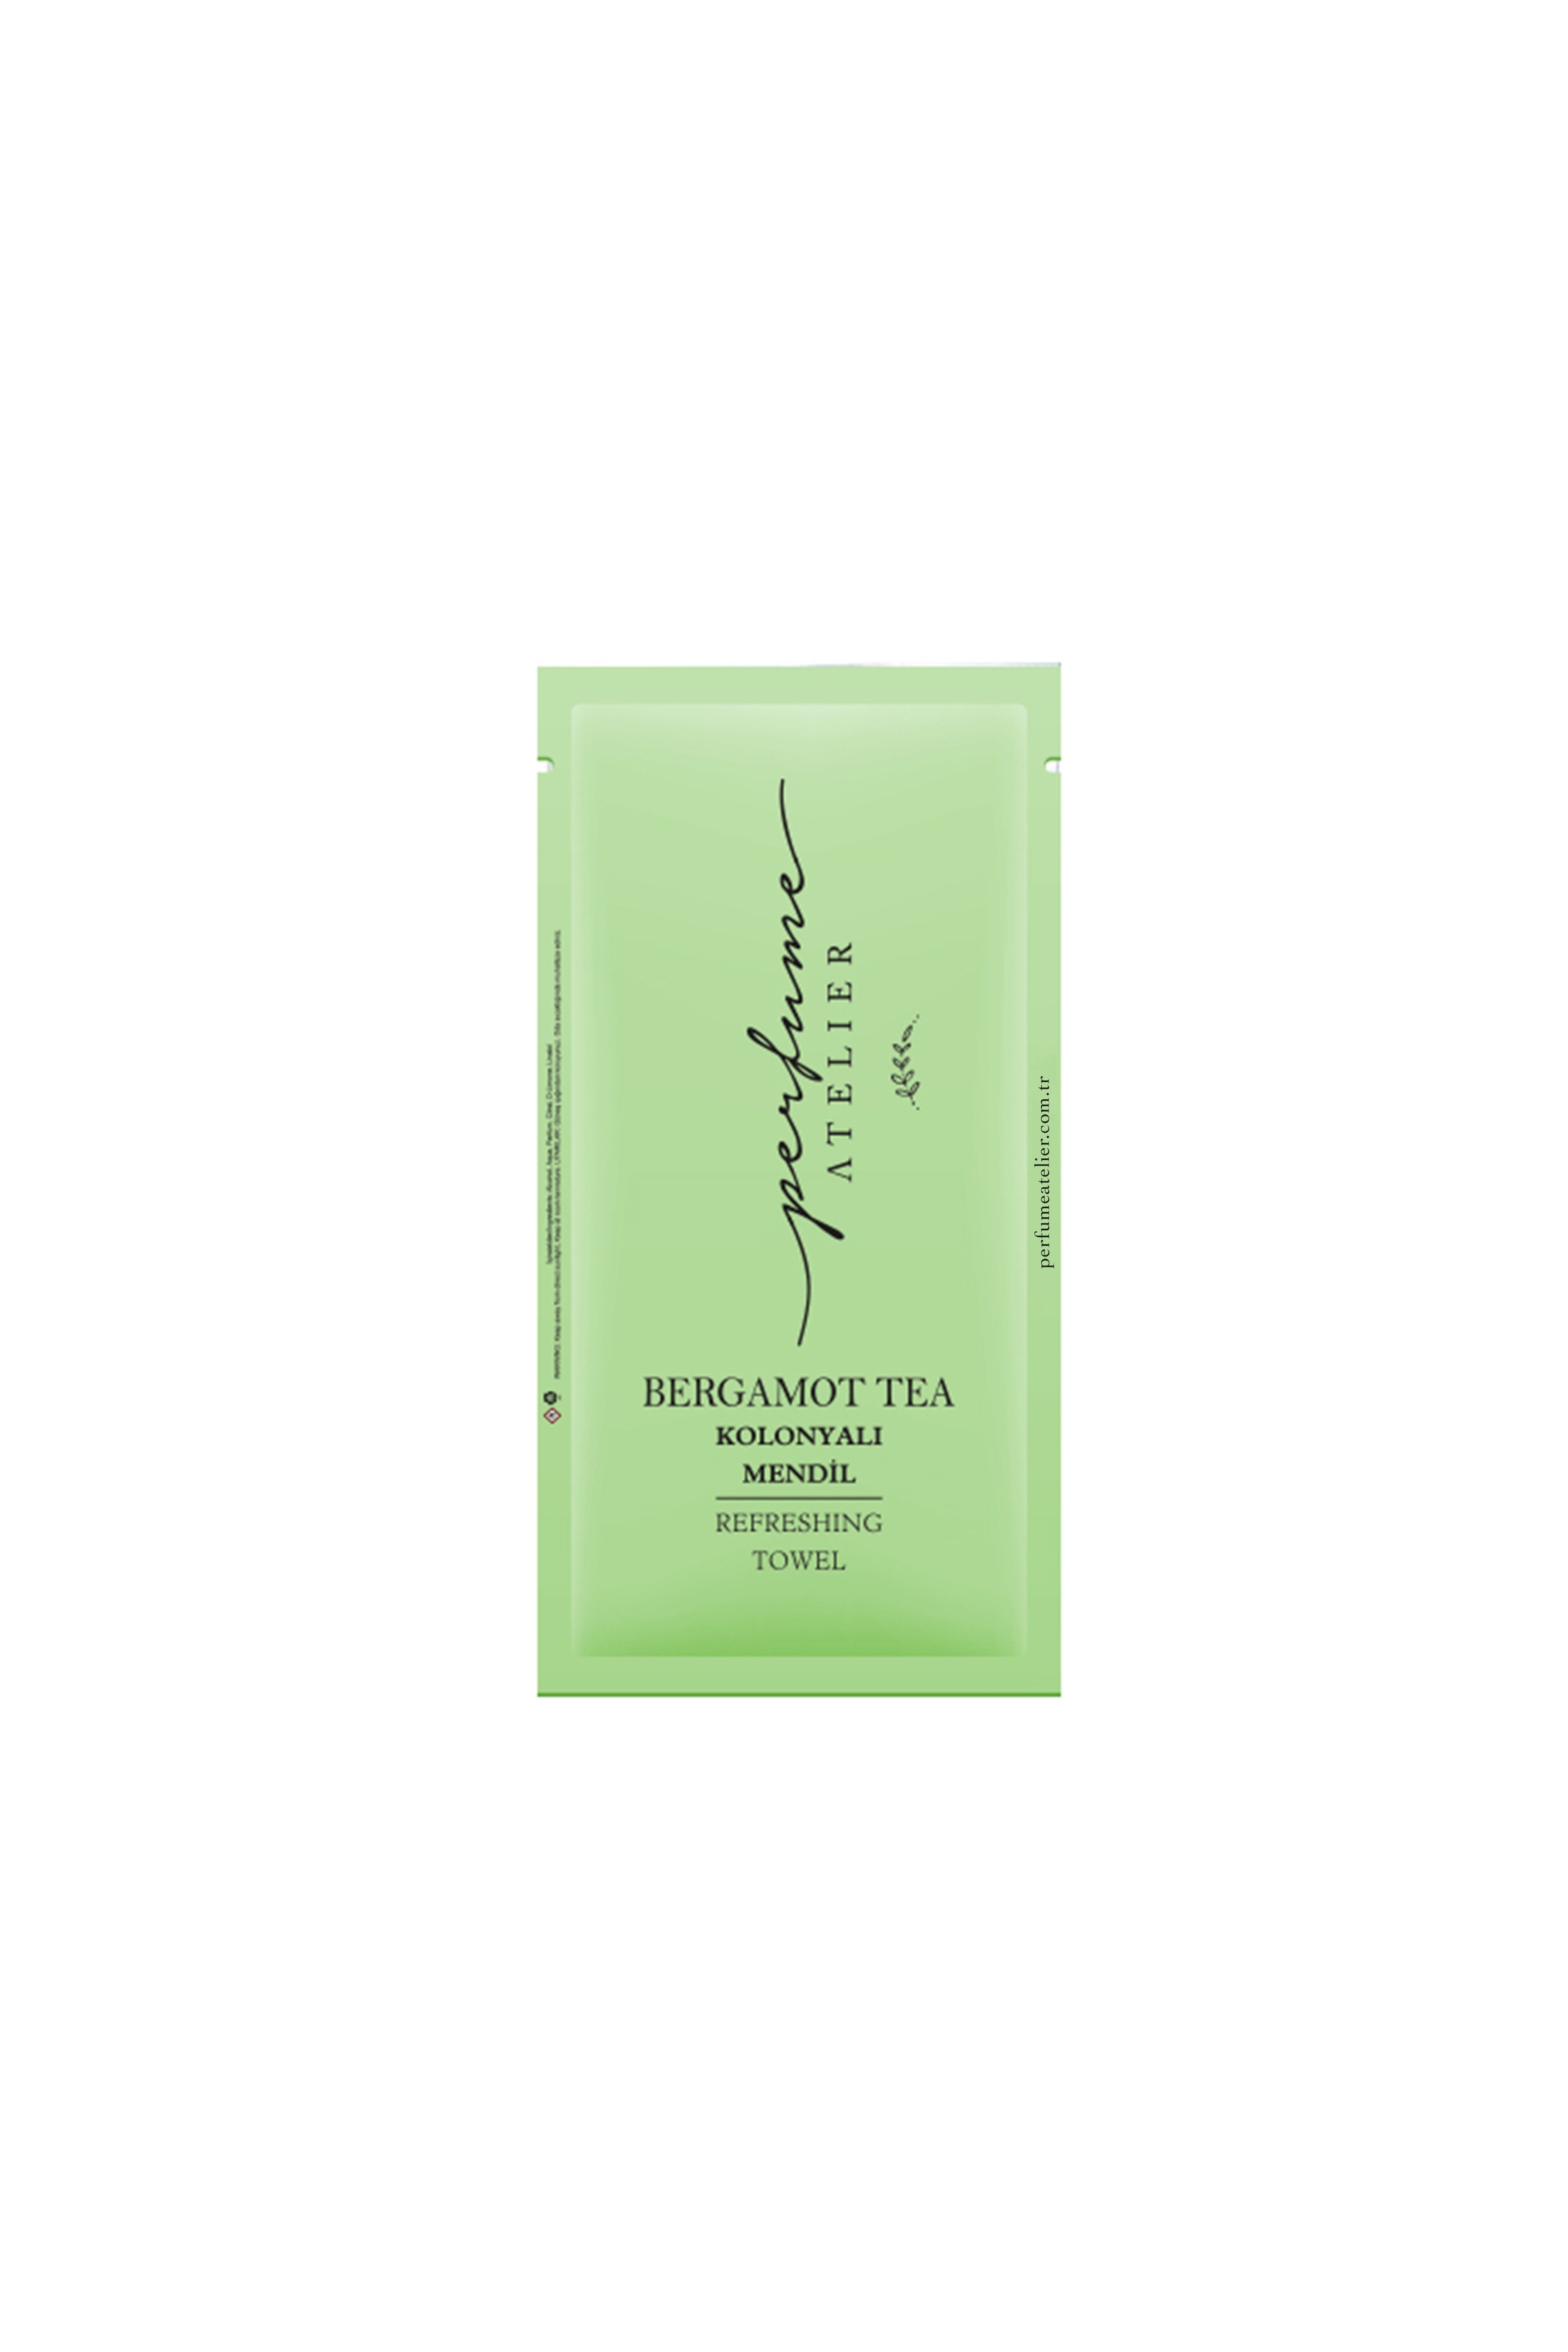  Bergamot Tea 100's  Refreshing Towels main variant image